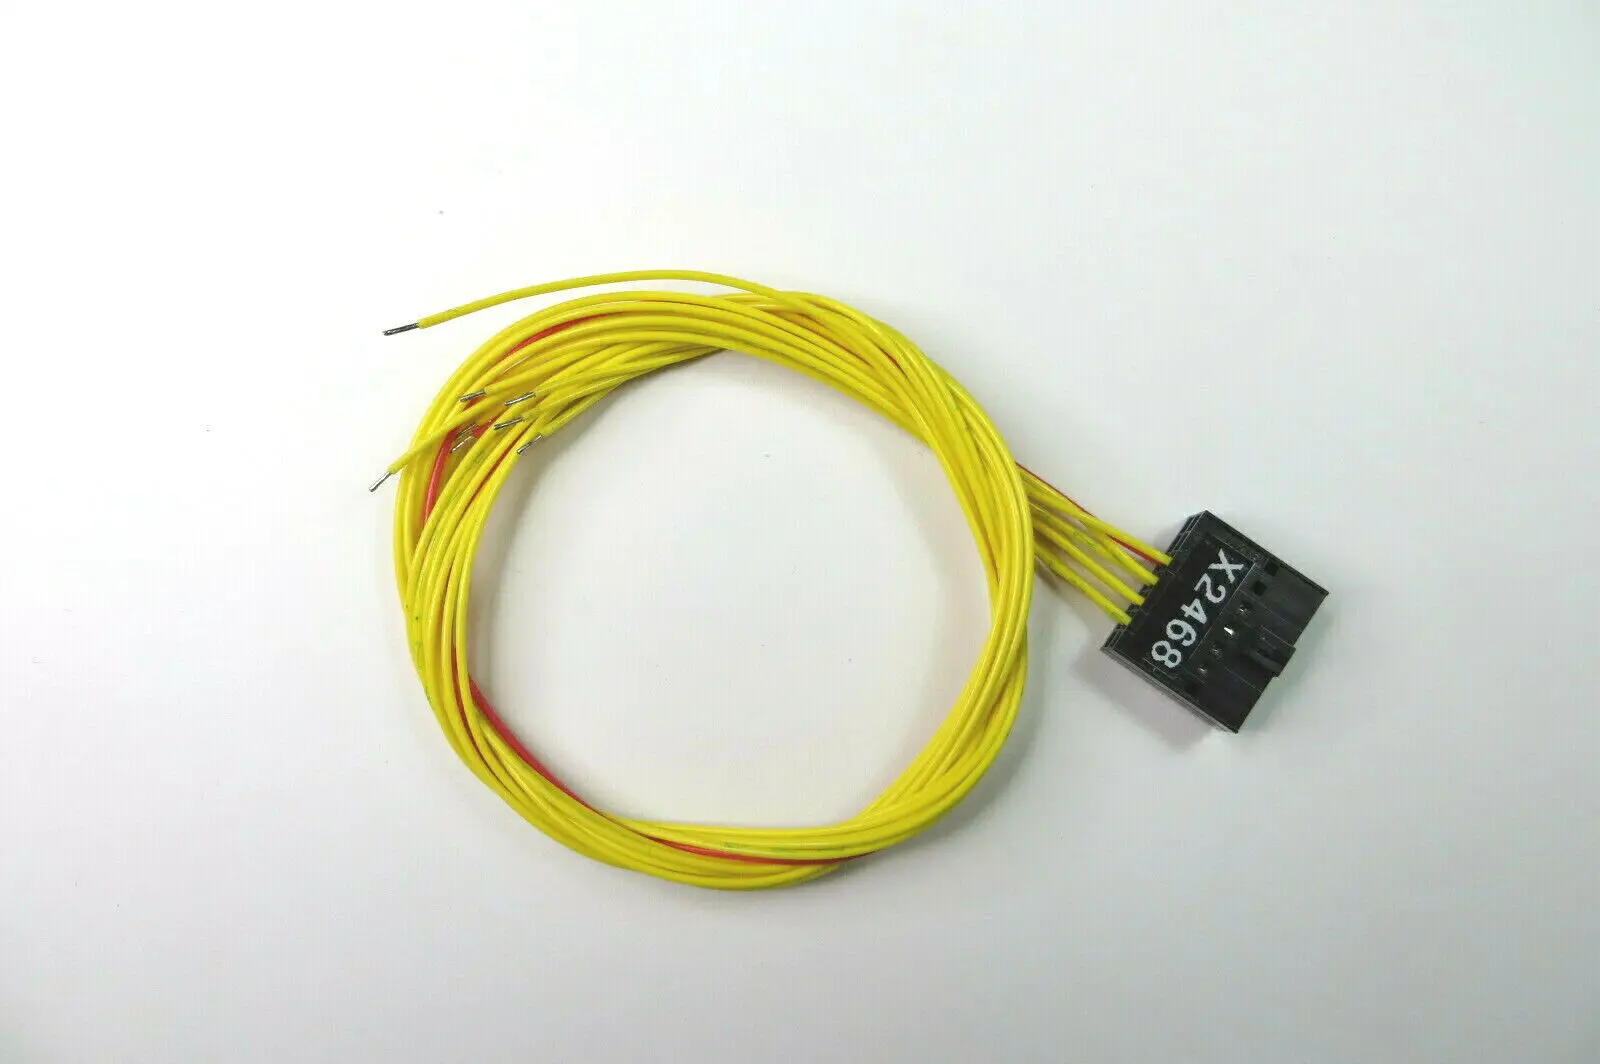 

High quality eeprom soldering cable for Smelecom USAProg DataSmart